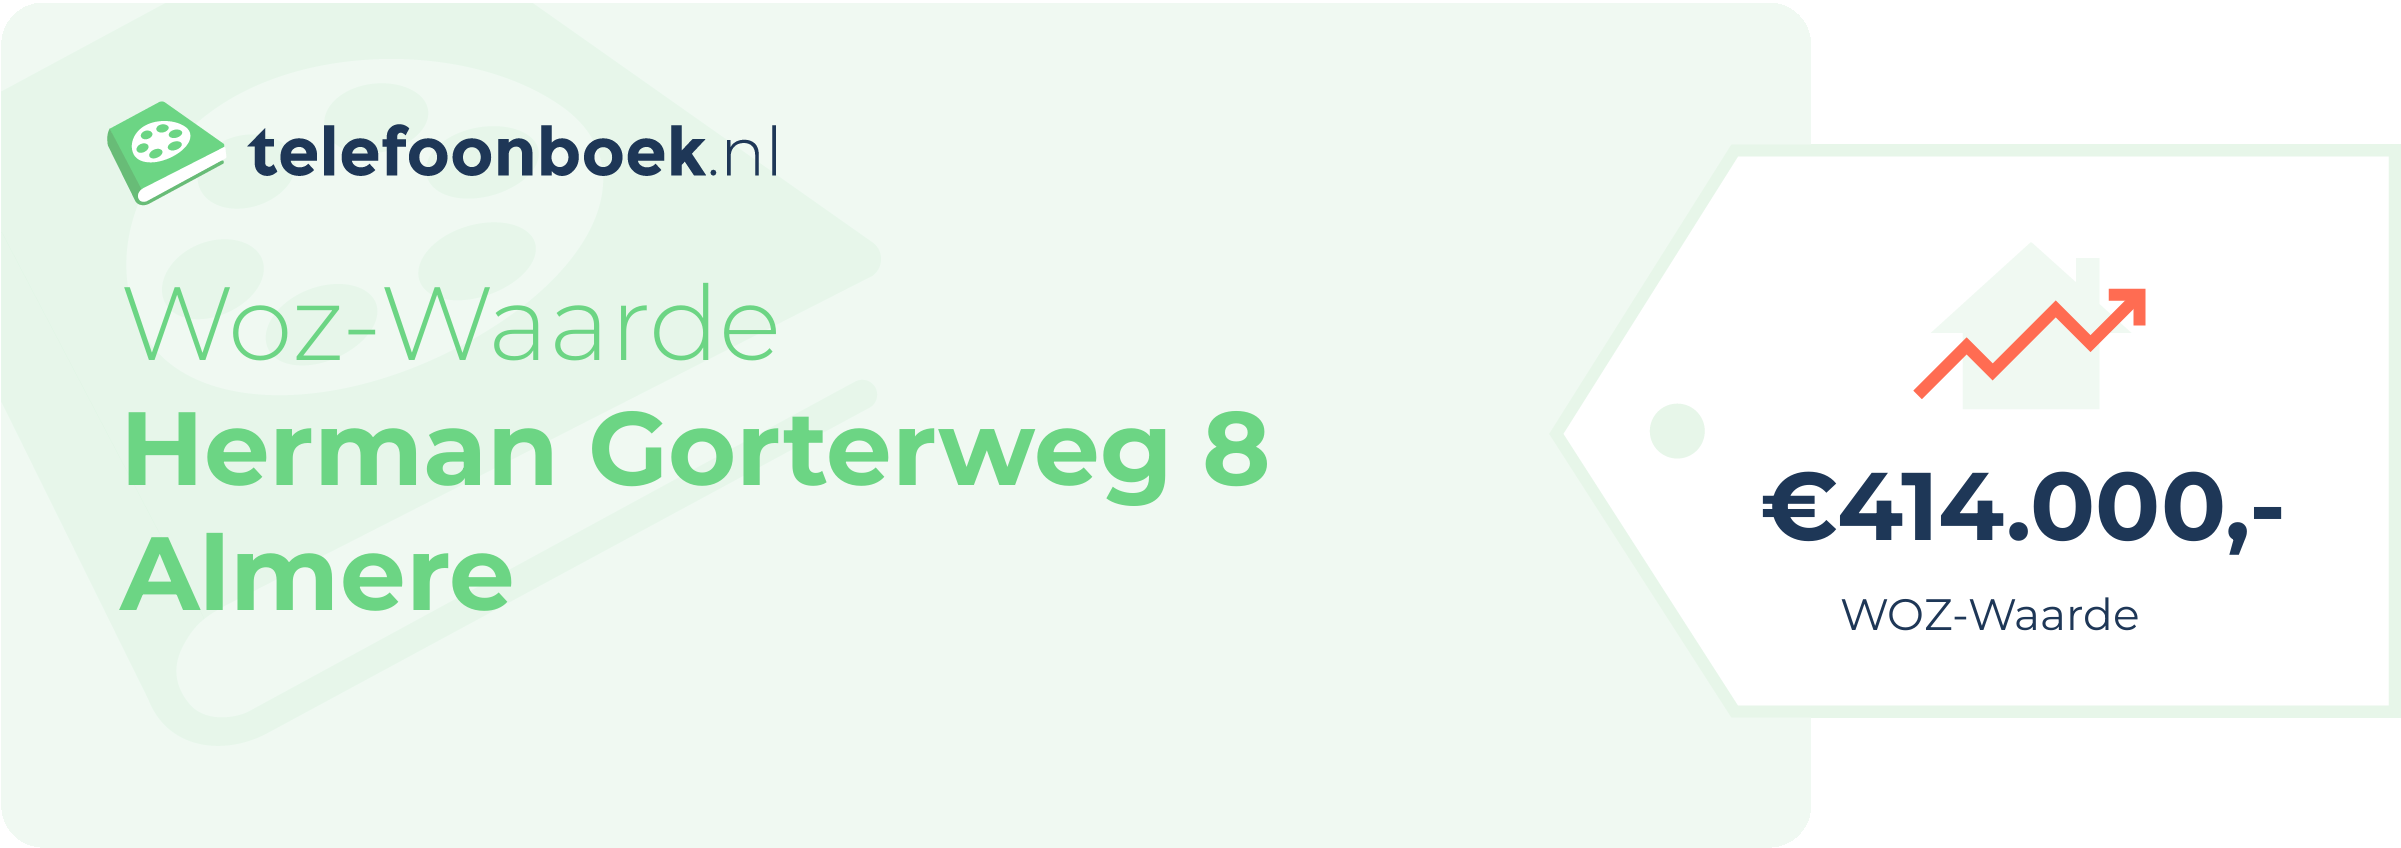 WOZ-waarde Herman Gorterweg 8 Almere